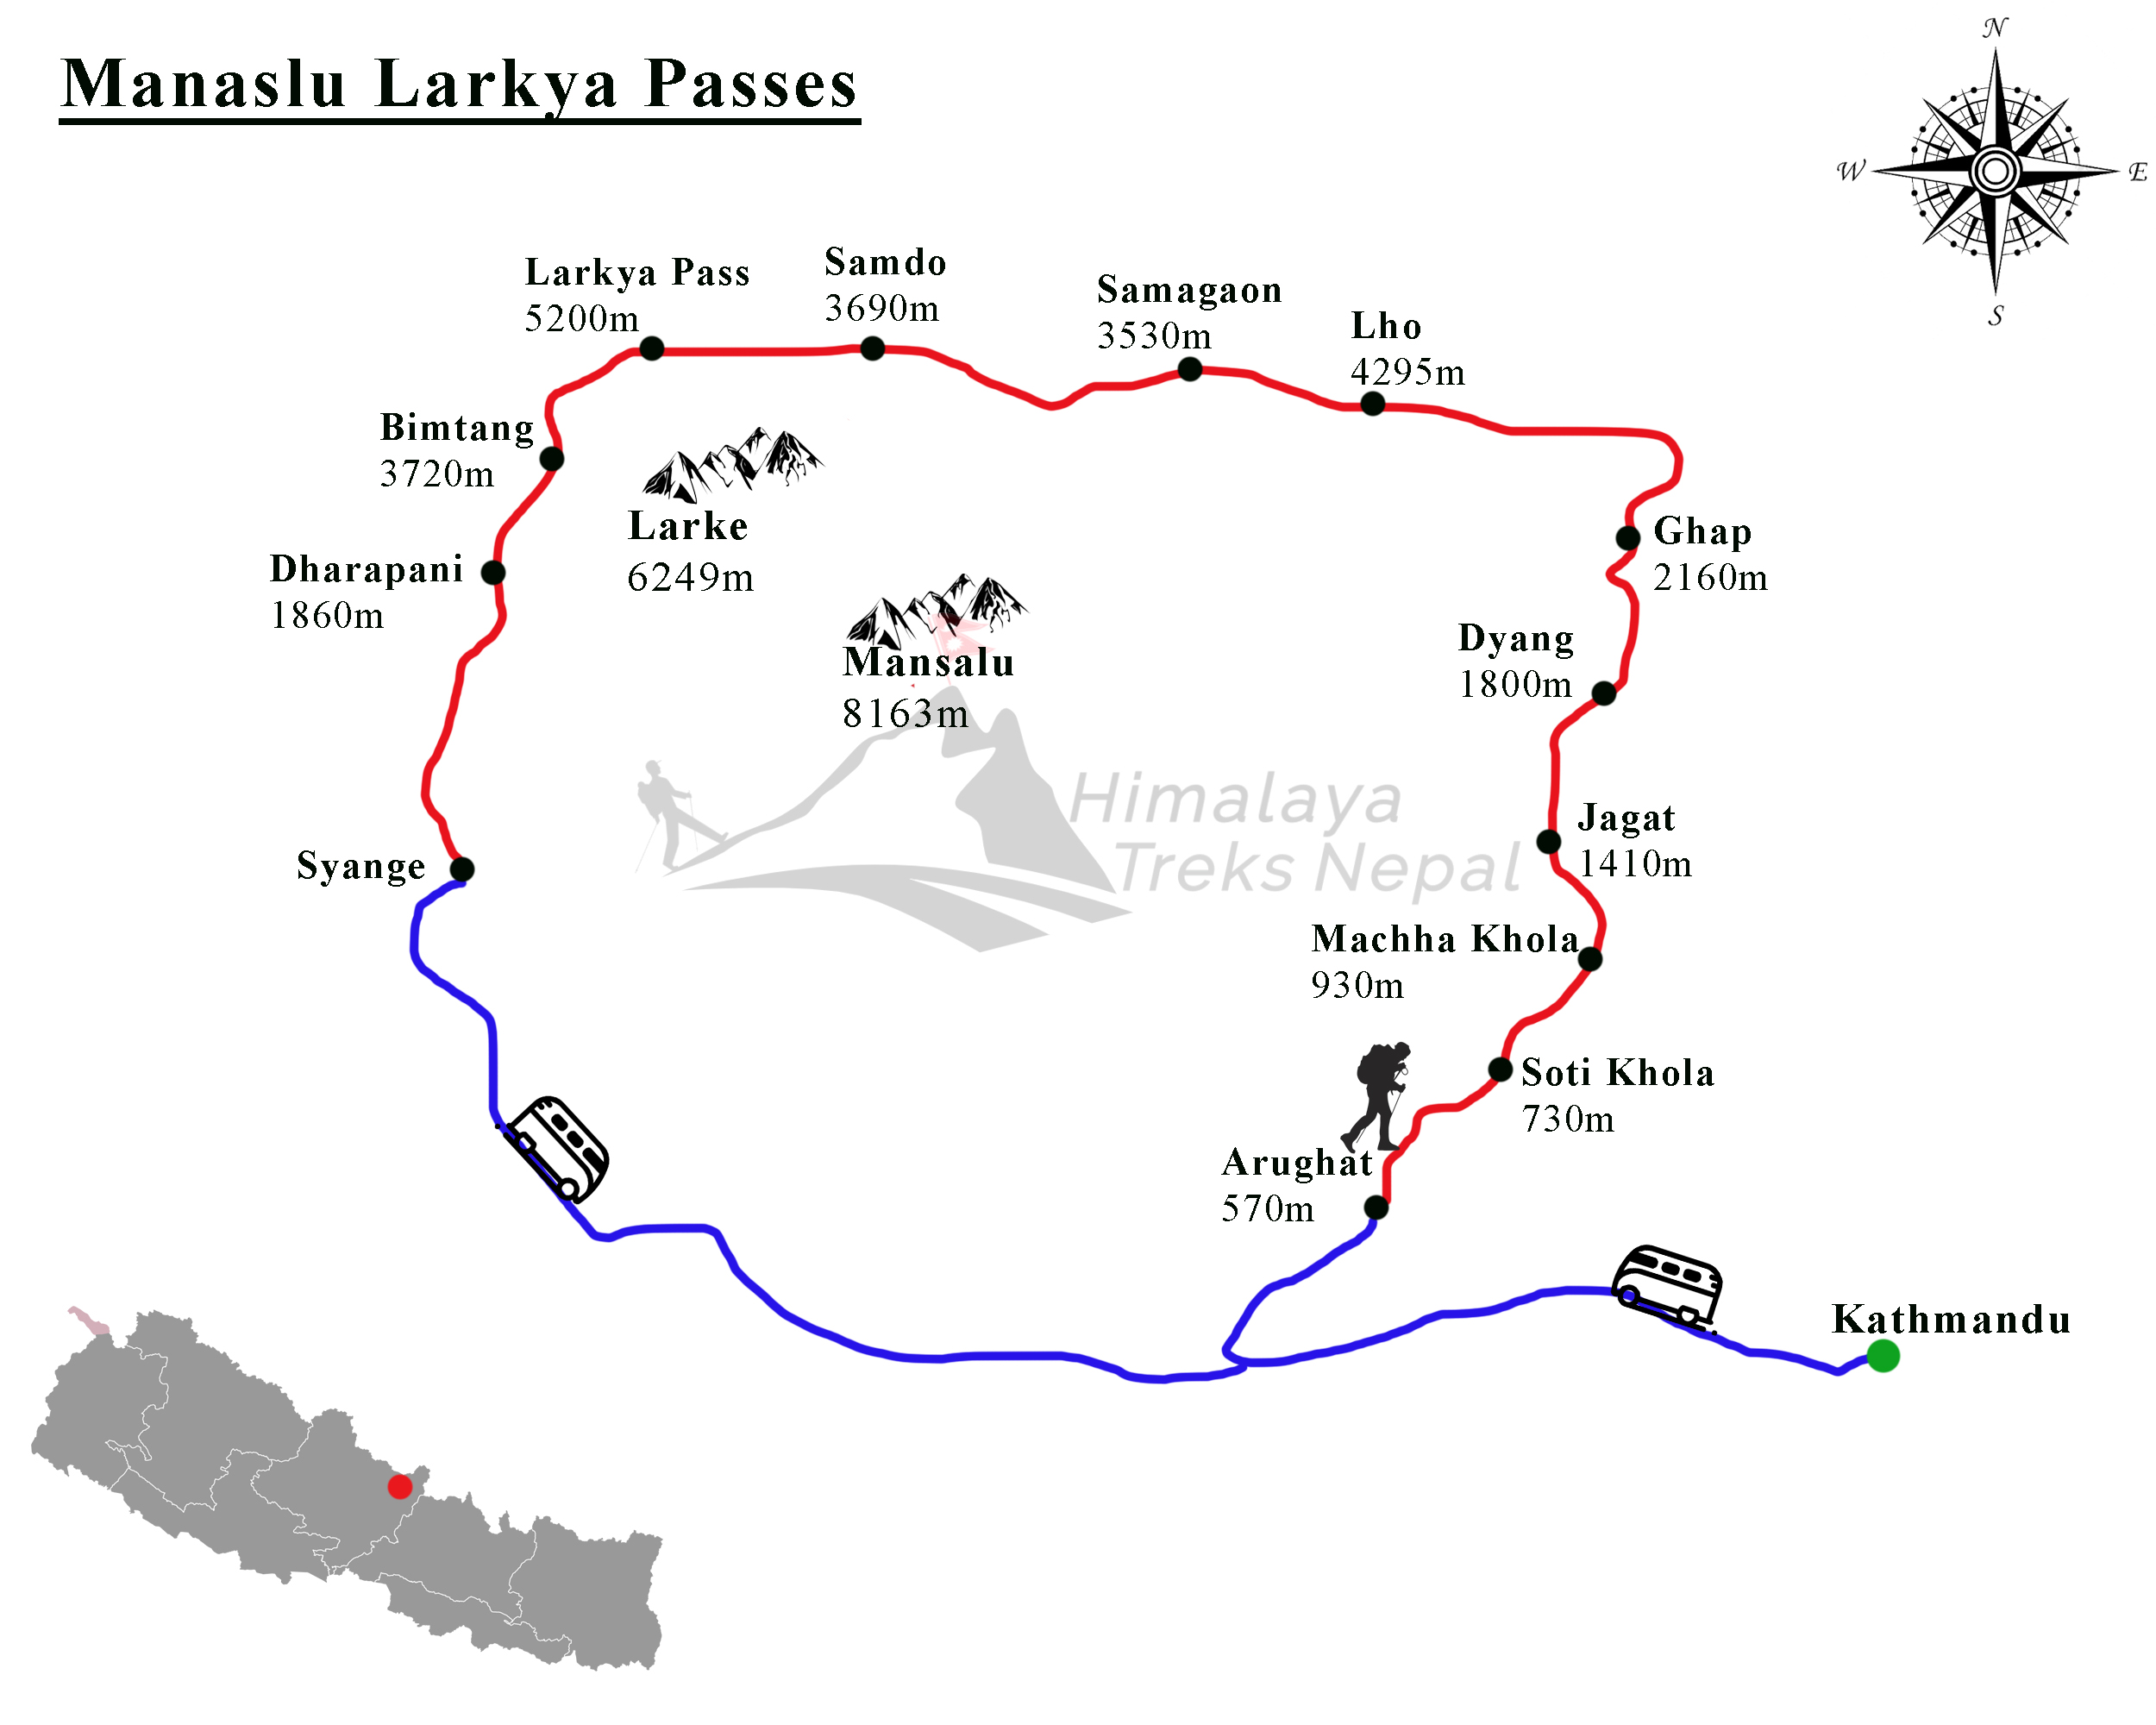 Manaslu Larkya Pass map